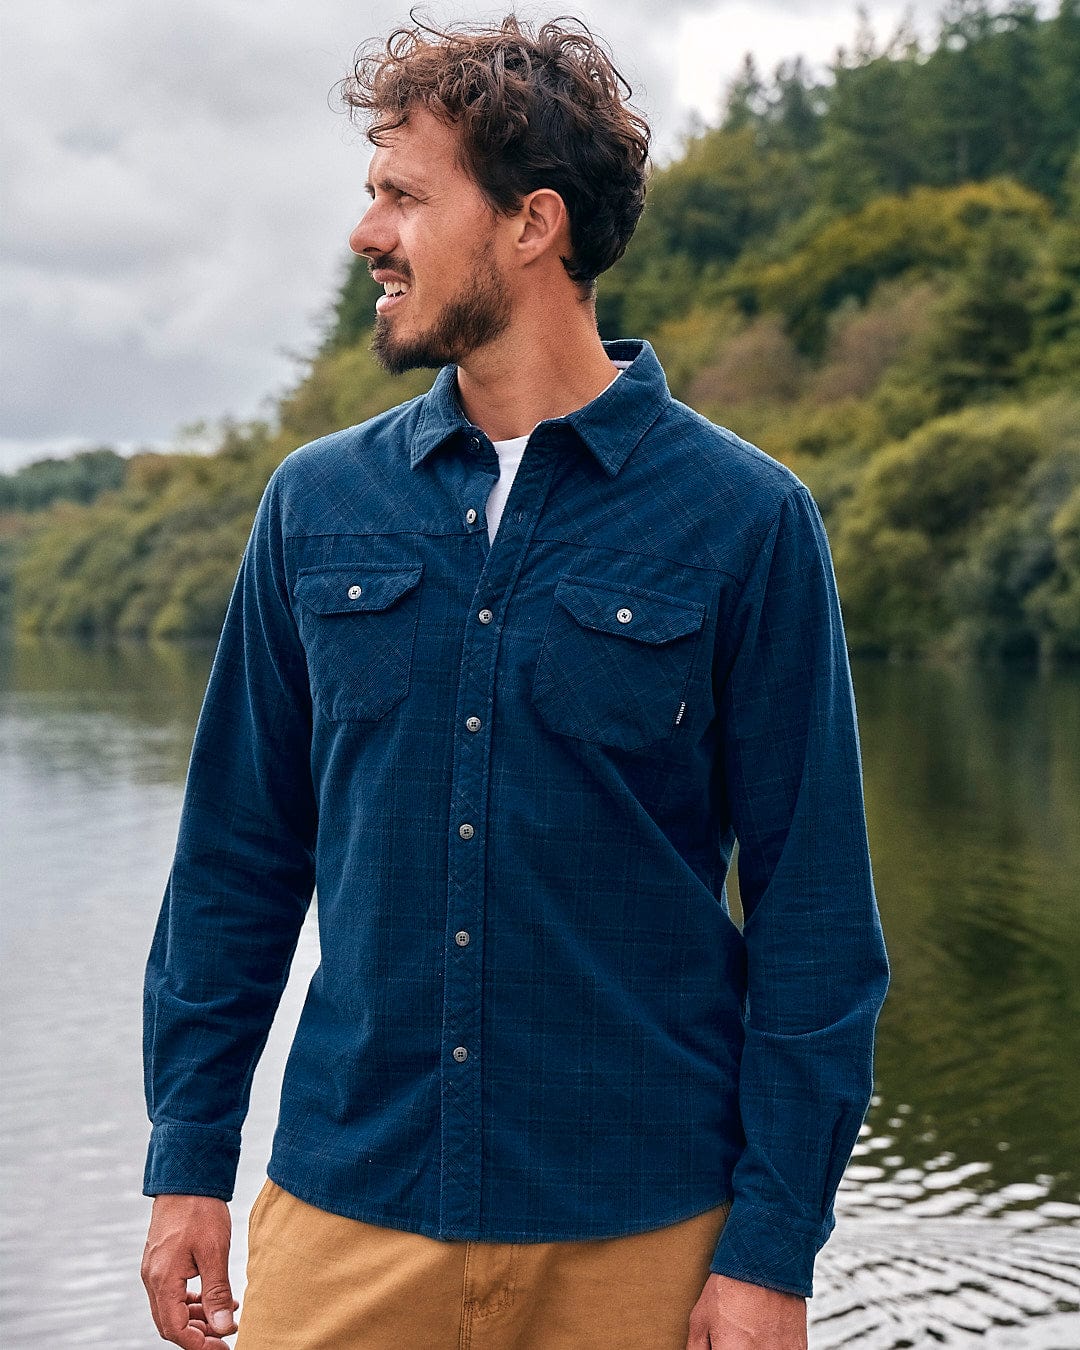 A man standing by a lake wearing a Jaxon - Mens Check Long Sleeve Shirt - Dark Blue from Saltrock.